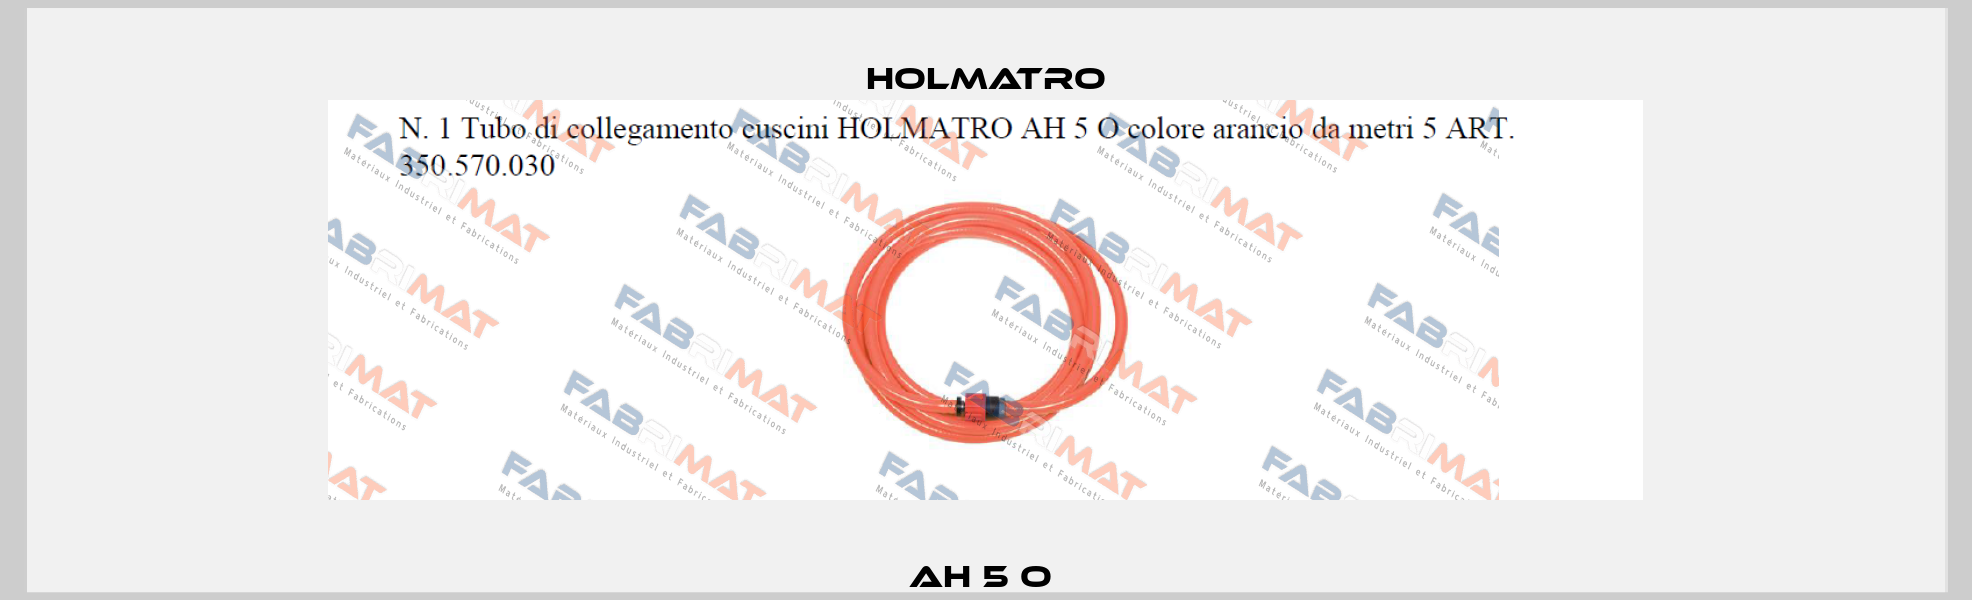 AH 5 O  Holmatro